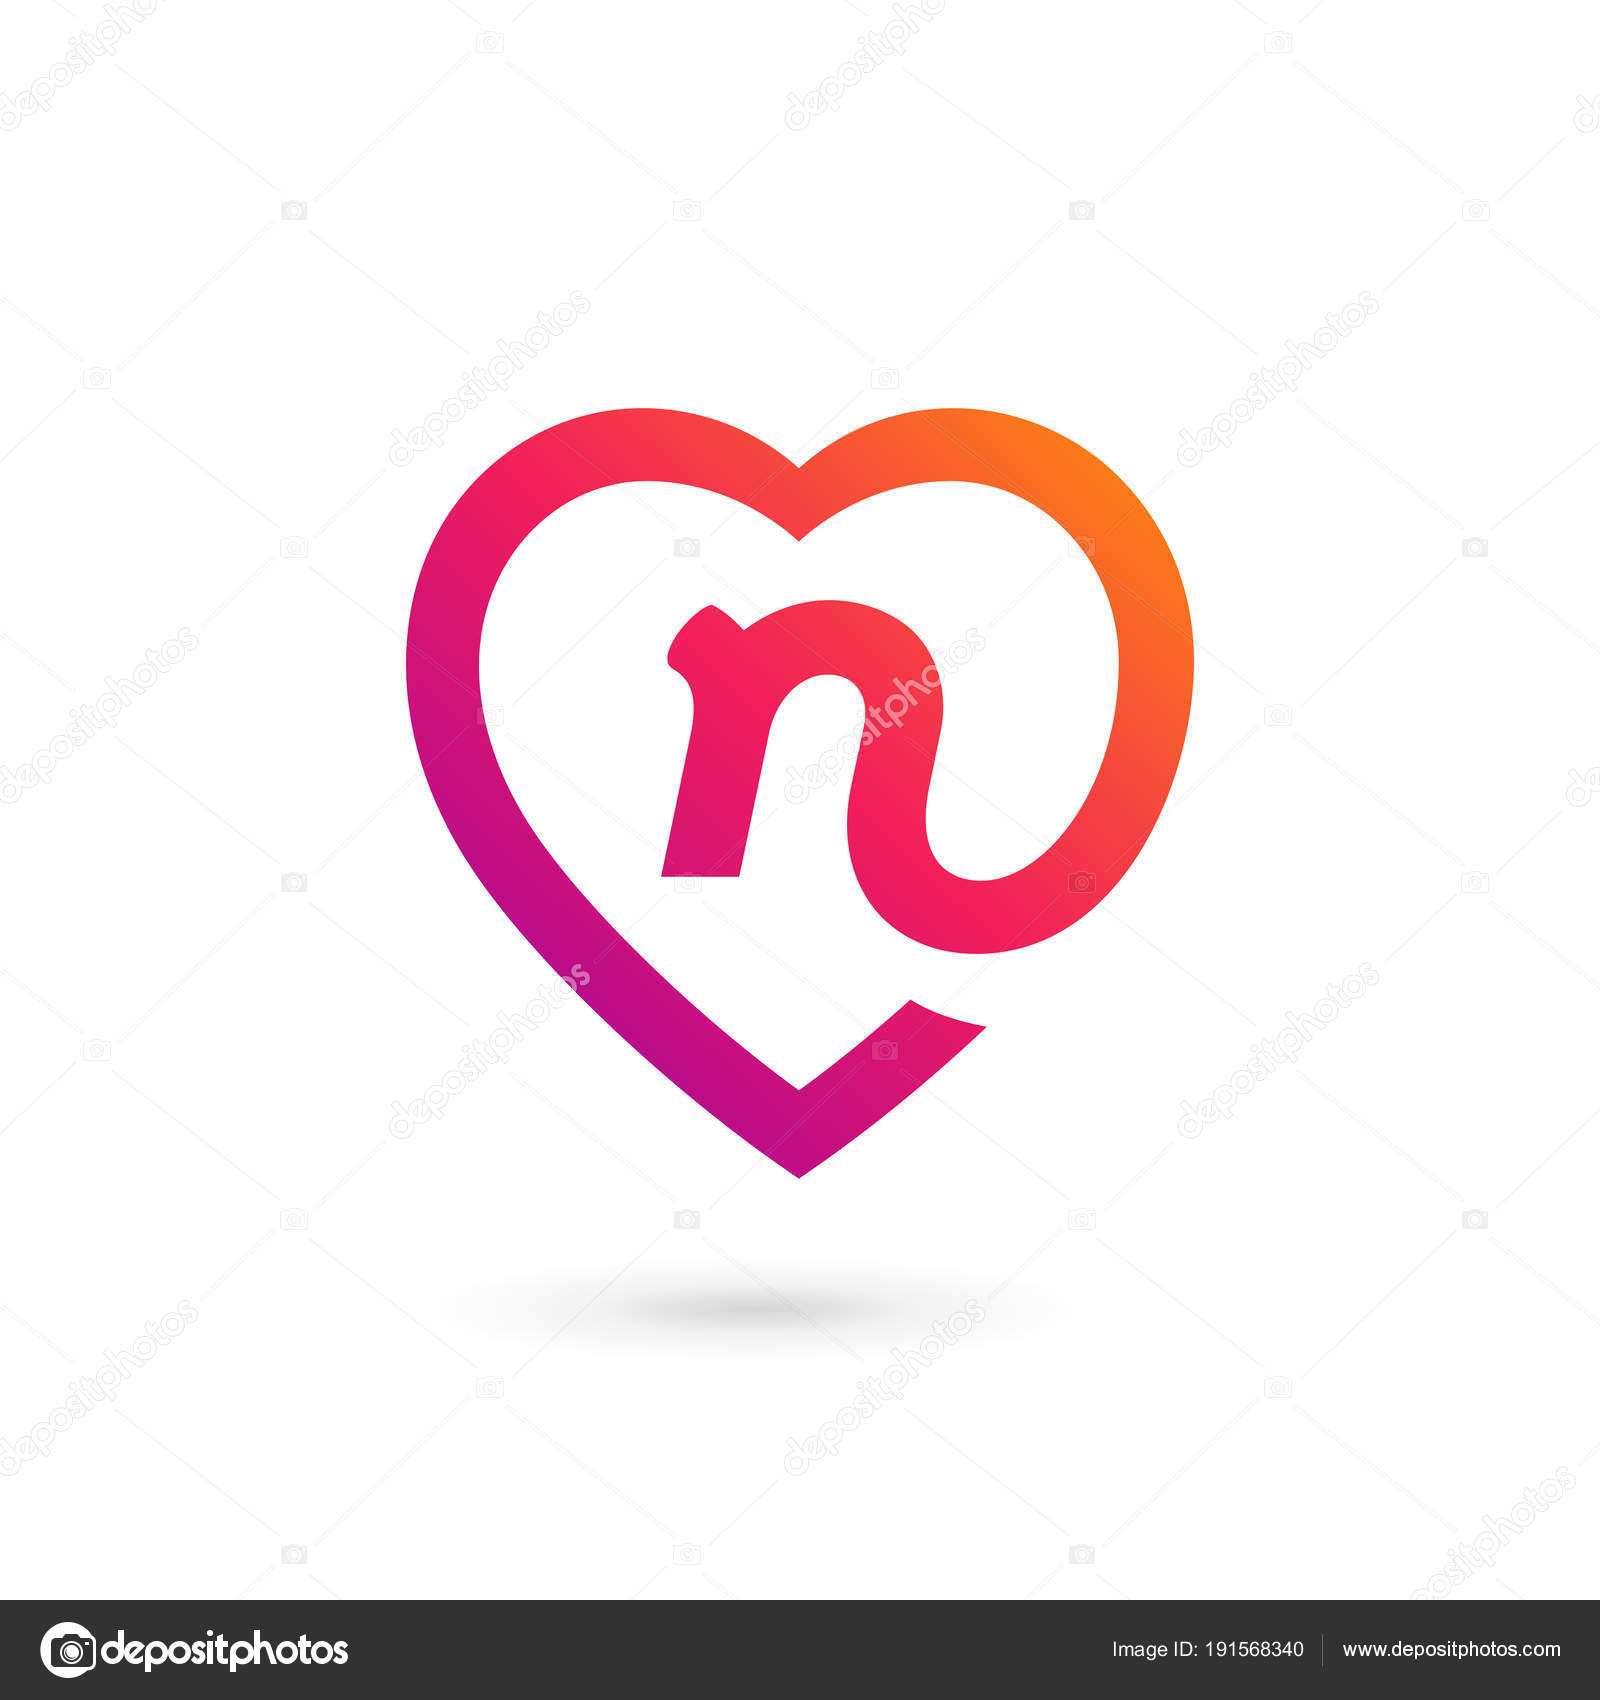 Letter V heart symbol logo icon design template elements Stock